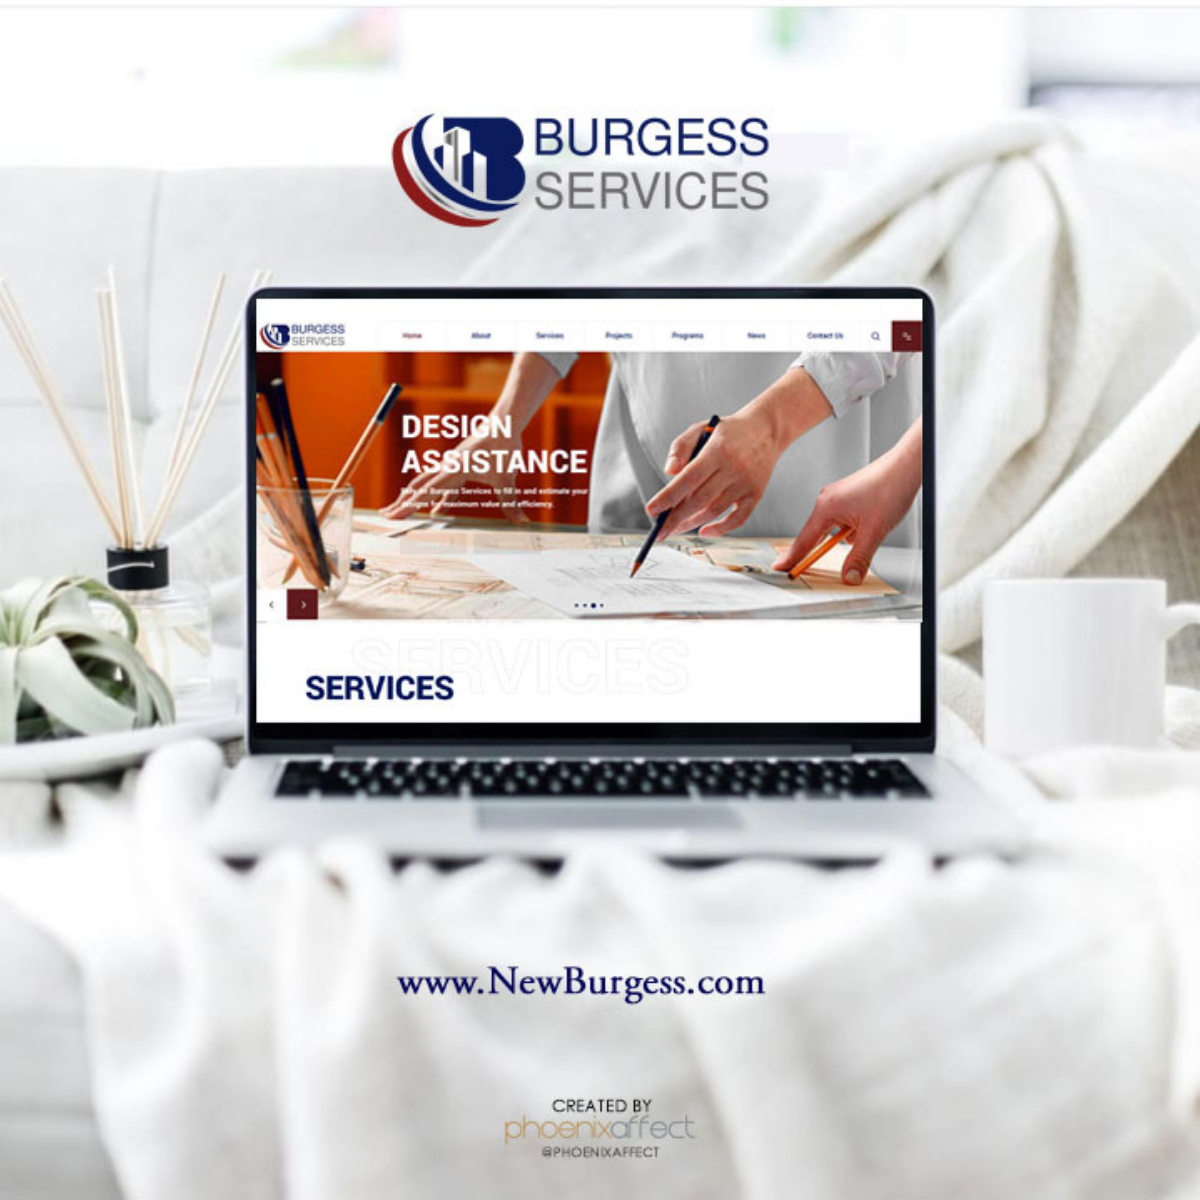 Burgess Services new website placard